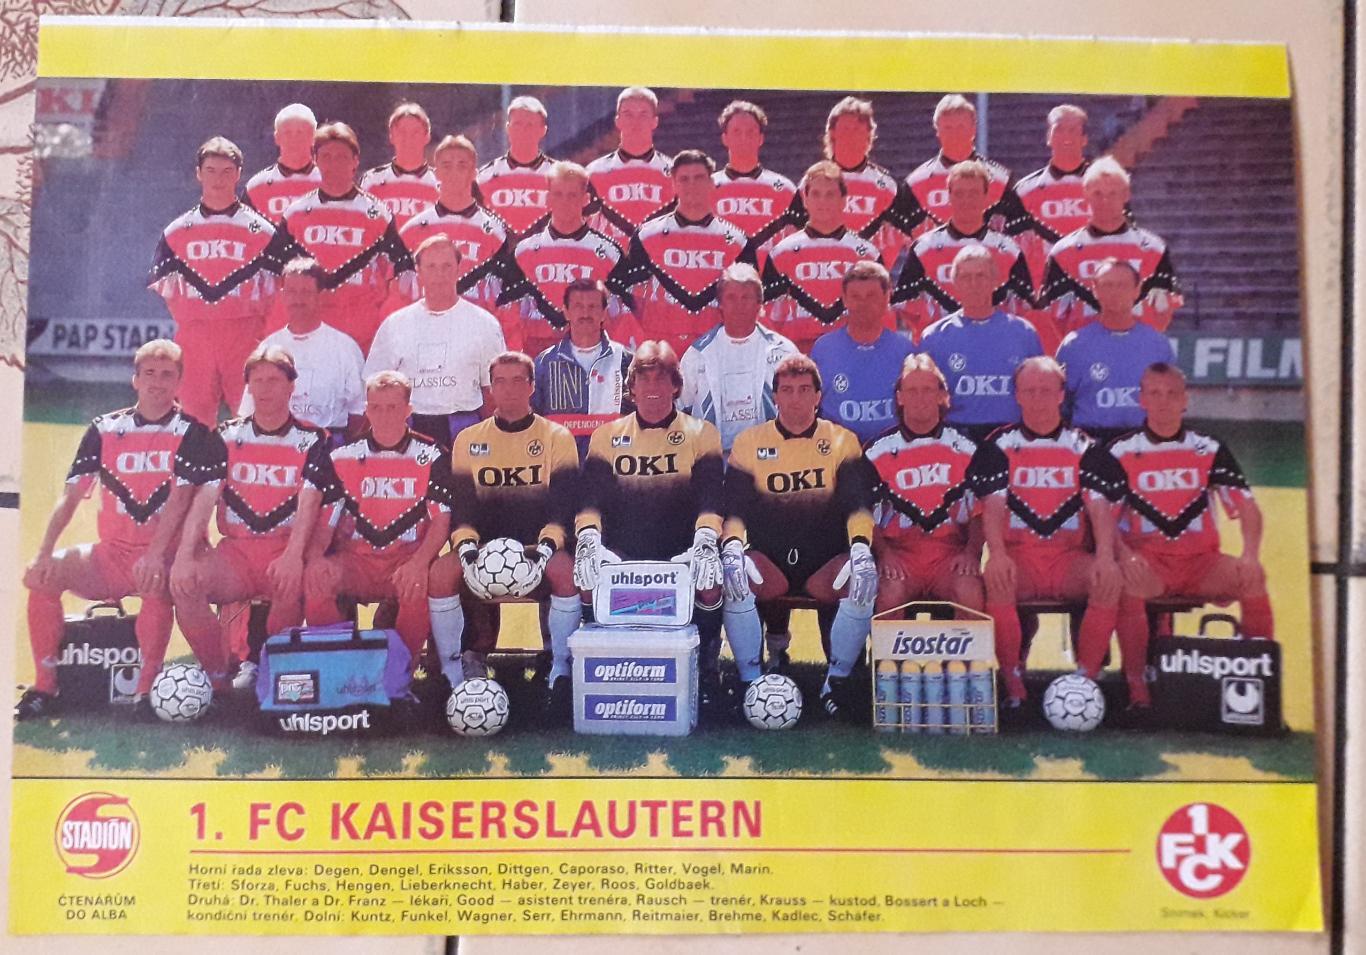 1. FC Kaiserslautern..Плакат формата А4 из журнала Stadion.